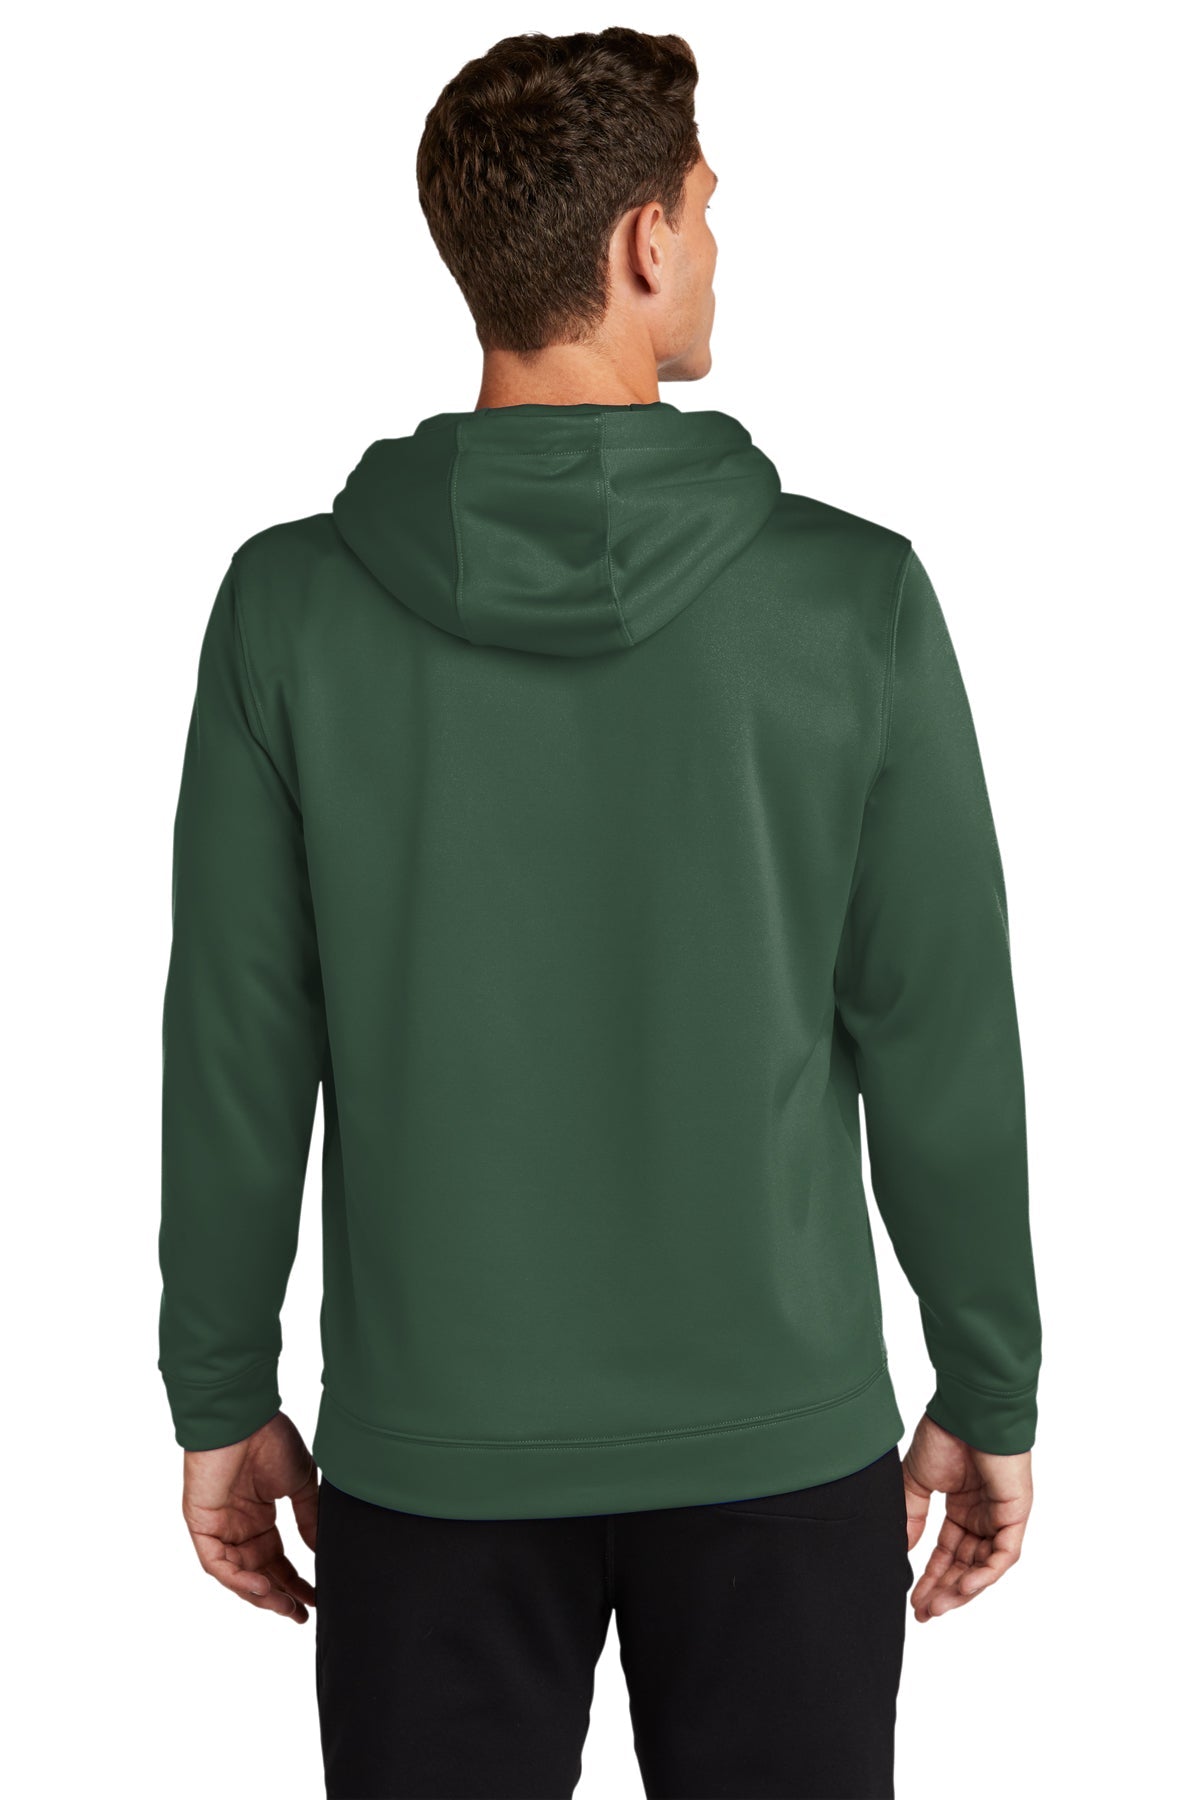 sport-tek_f244 _forest green_company_logo_sweatshirts